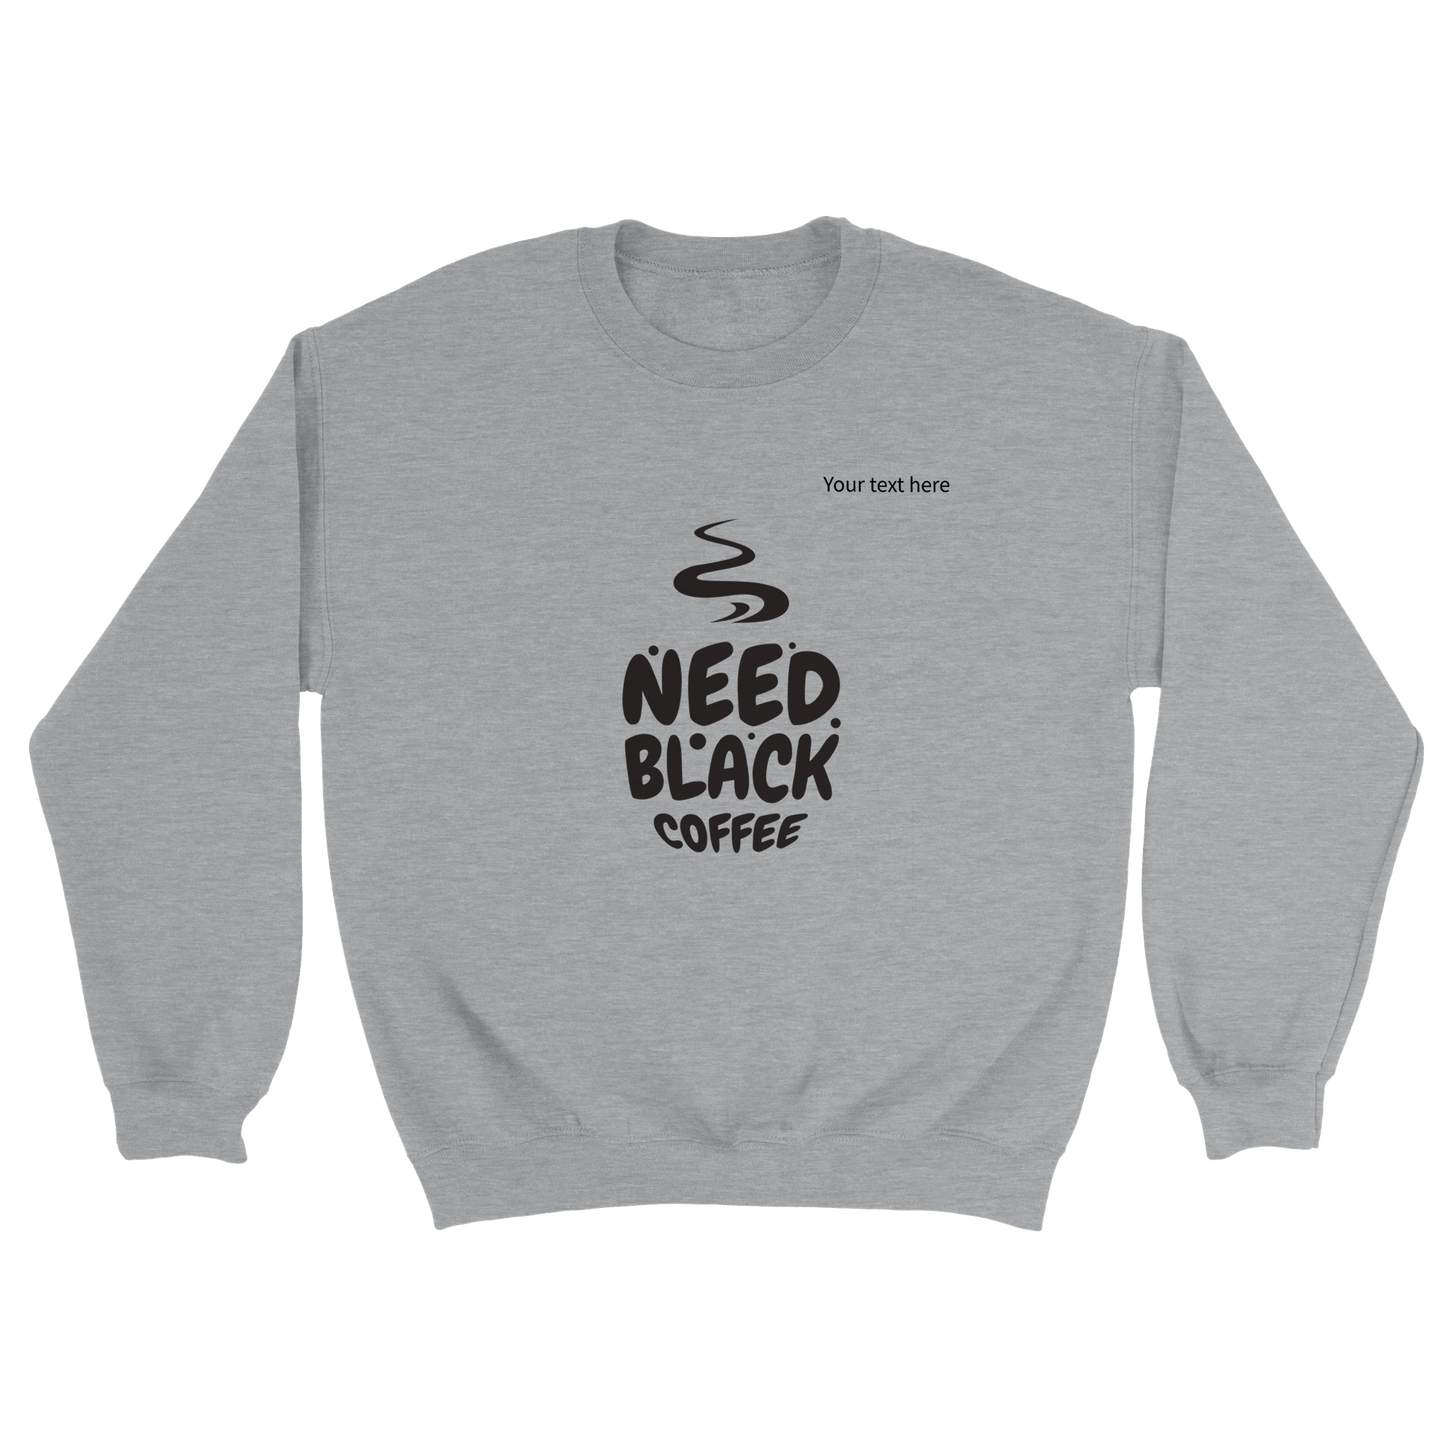 Need black coffee custom text Classic Unisex Crewneck Sweatshirt